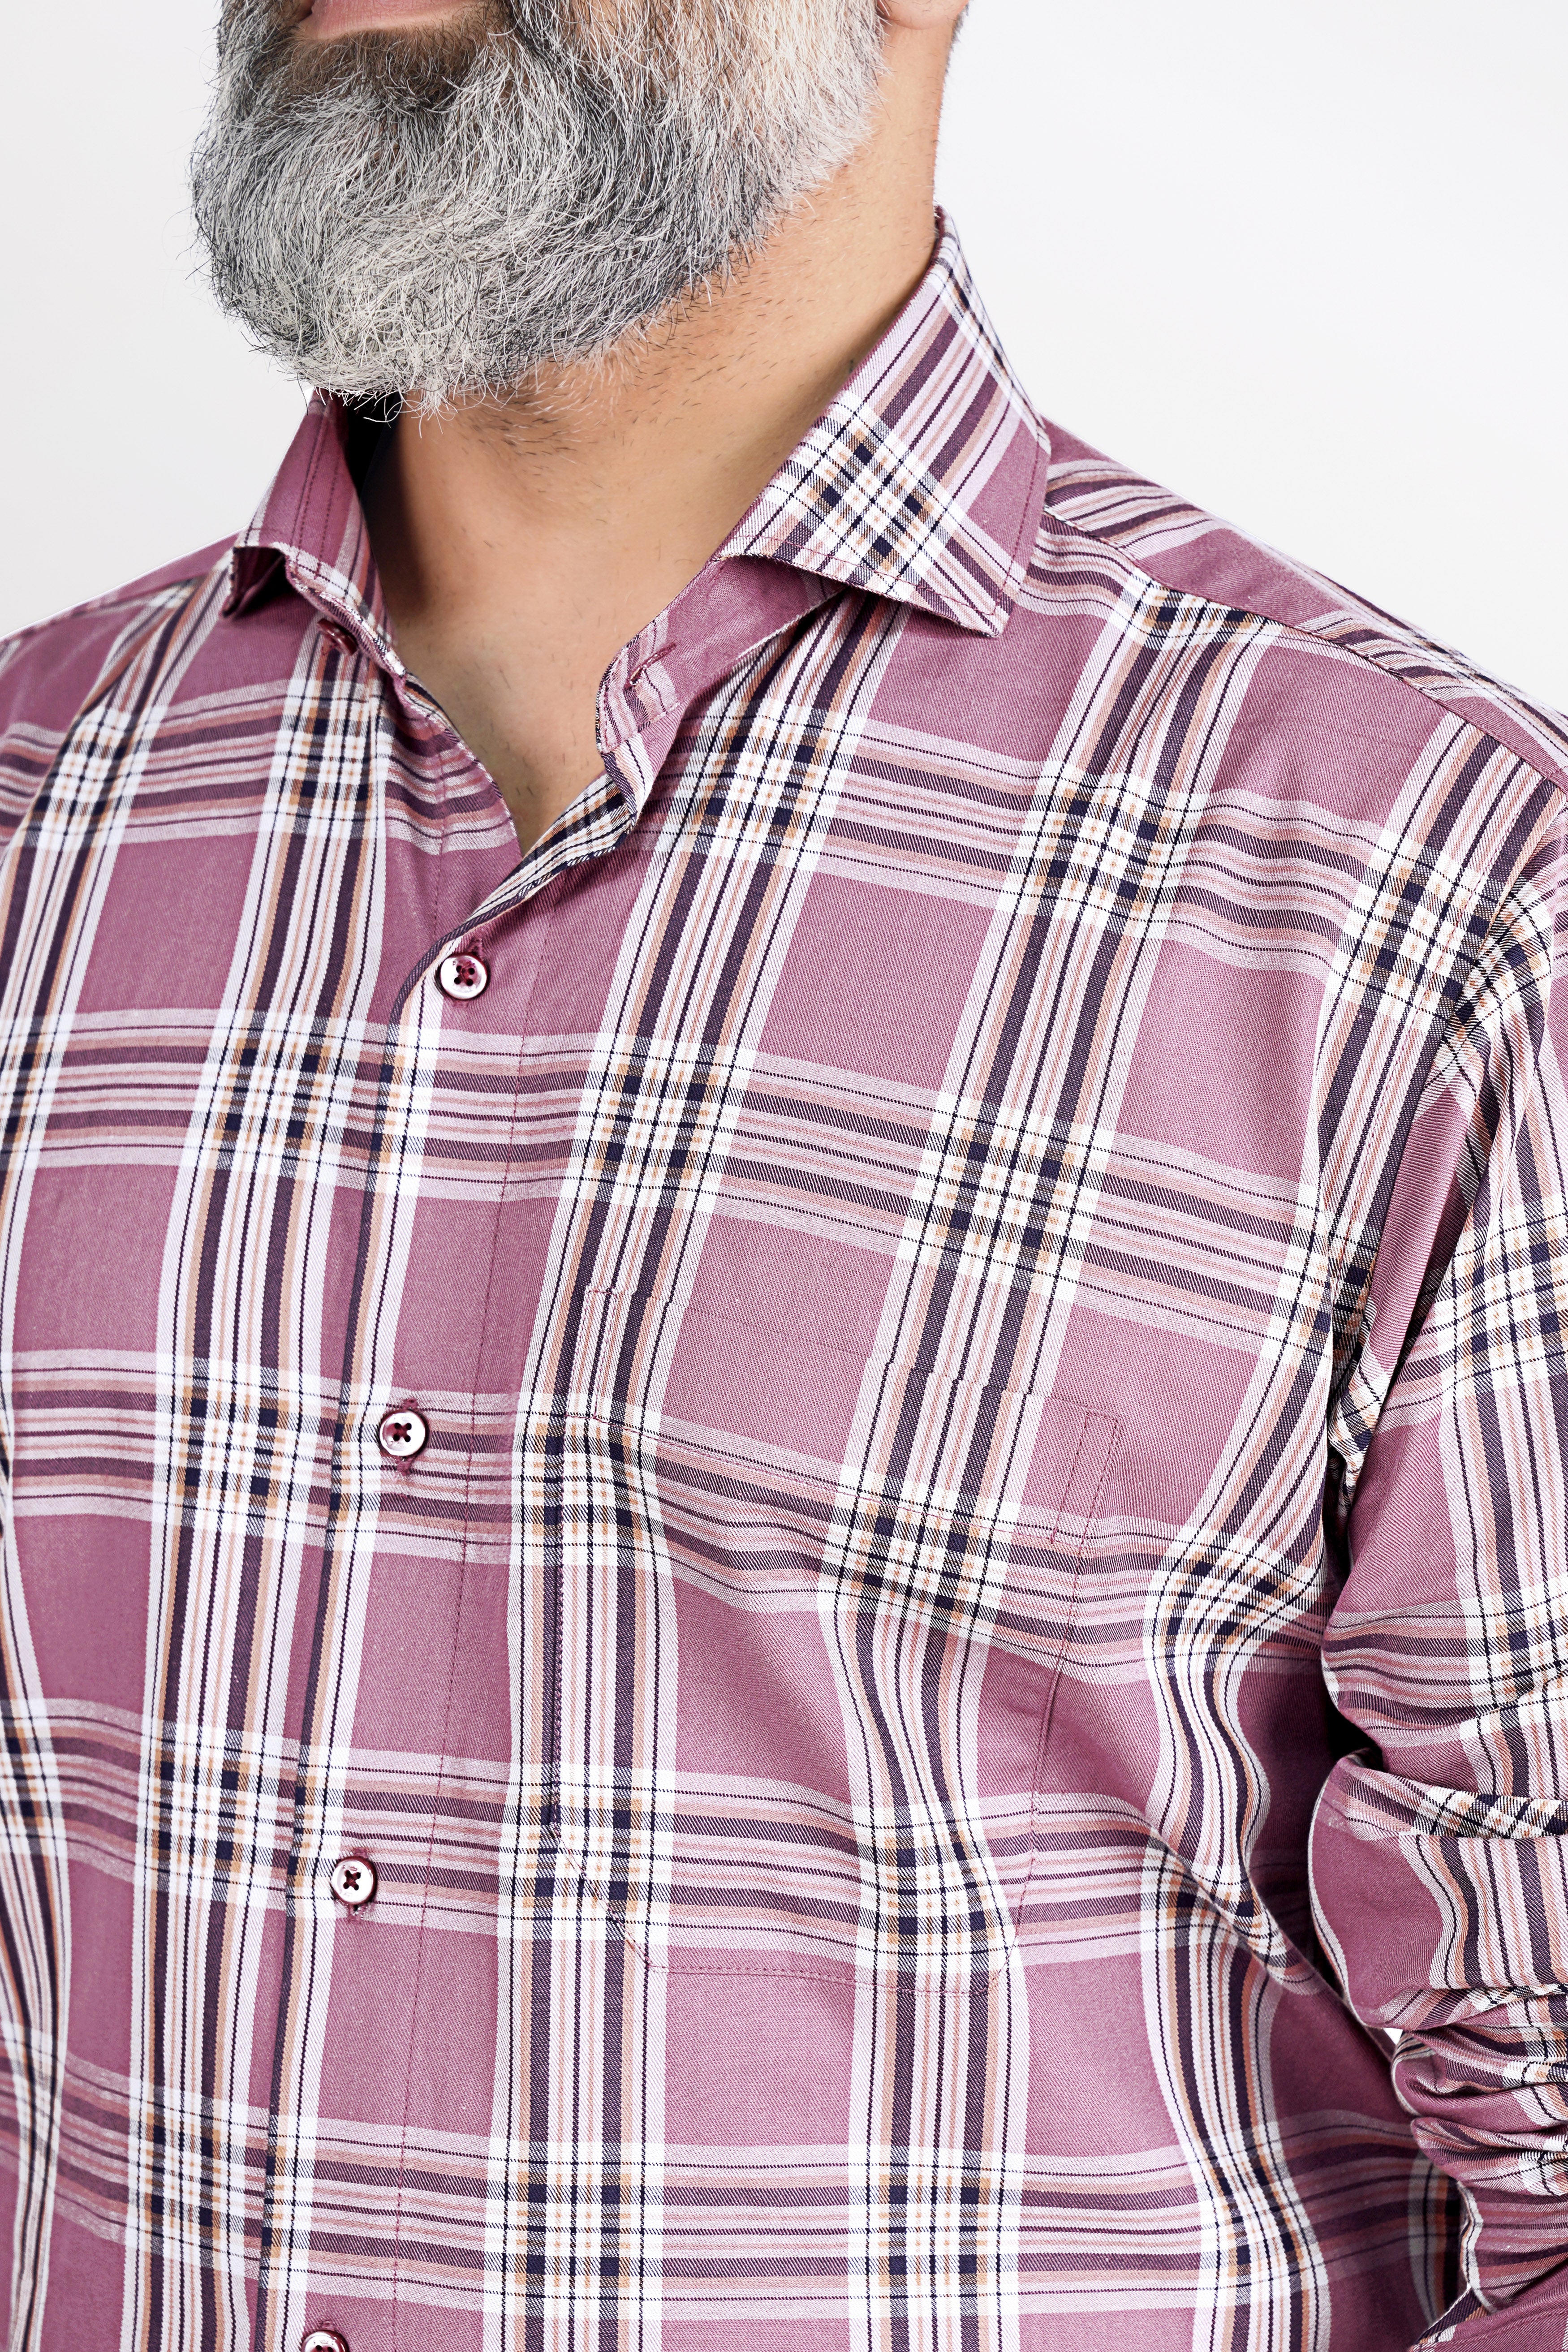 Turkish Rose Pink and Rhino Blue Twill Plaid Premium Cotton Shirt